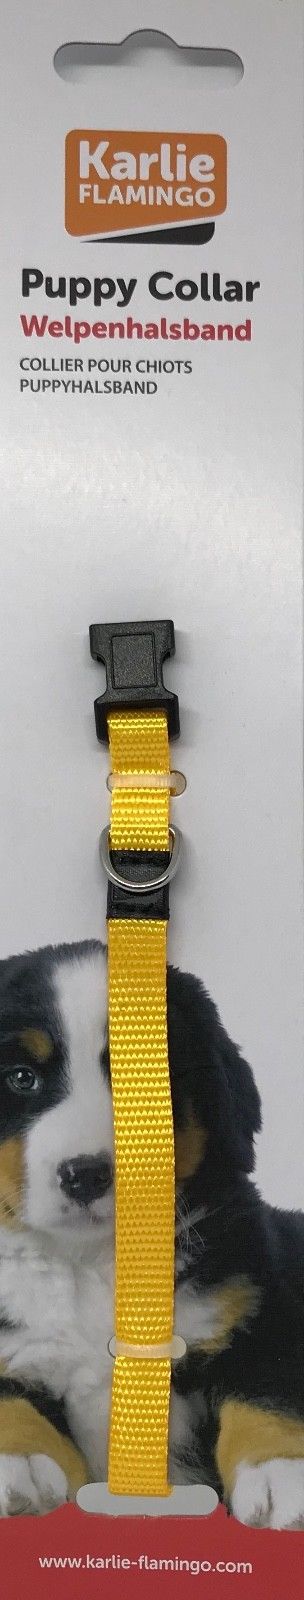 Variation of Karlie verstellbares Welpen Hunde Halsband Welpenhalsband 4 Farben 20 30 cm 10mm 253230056952 6799